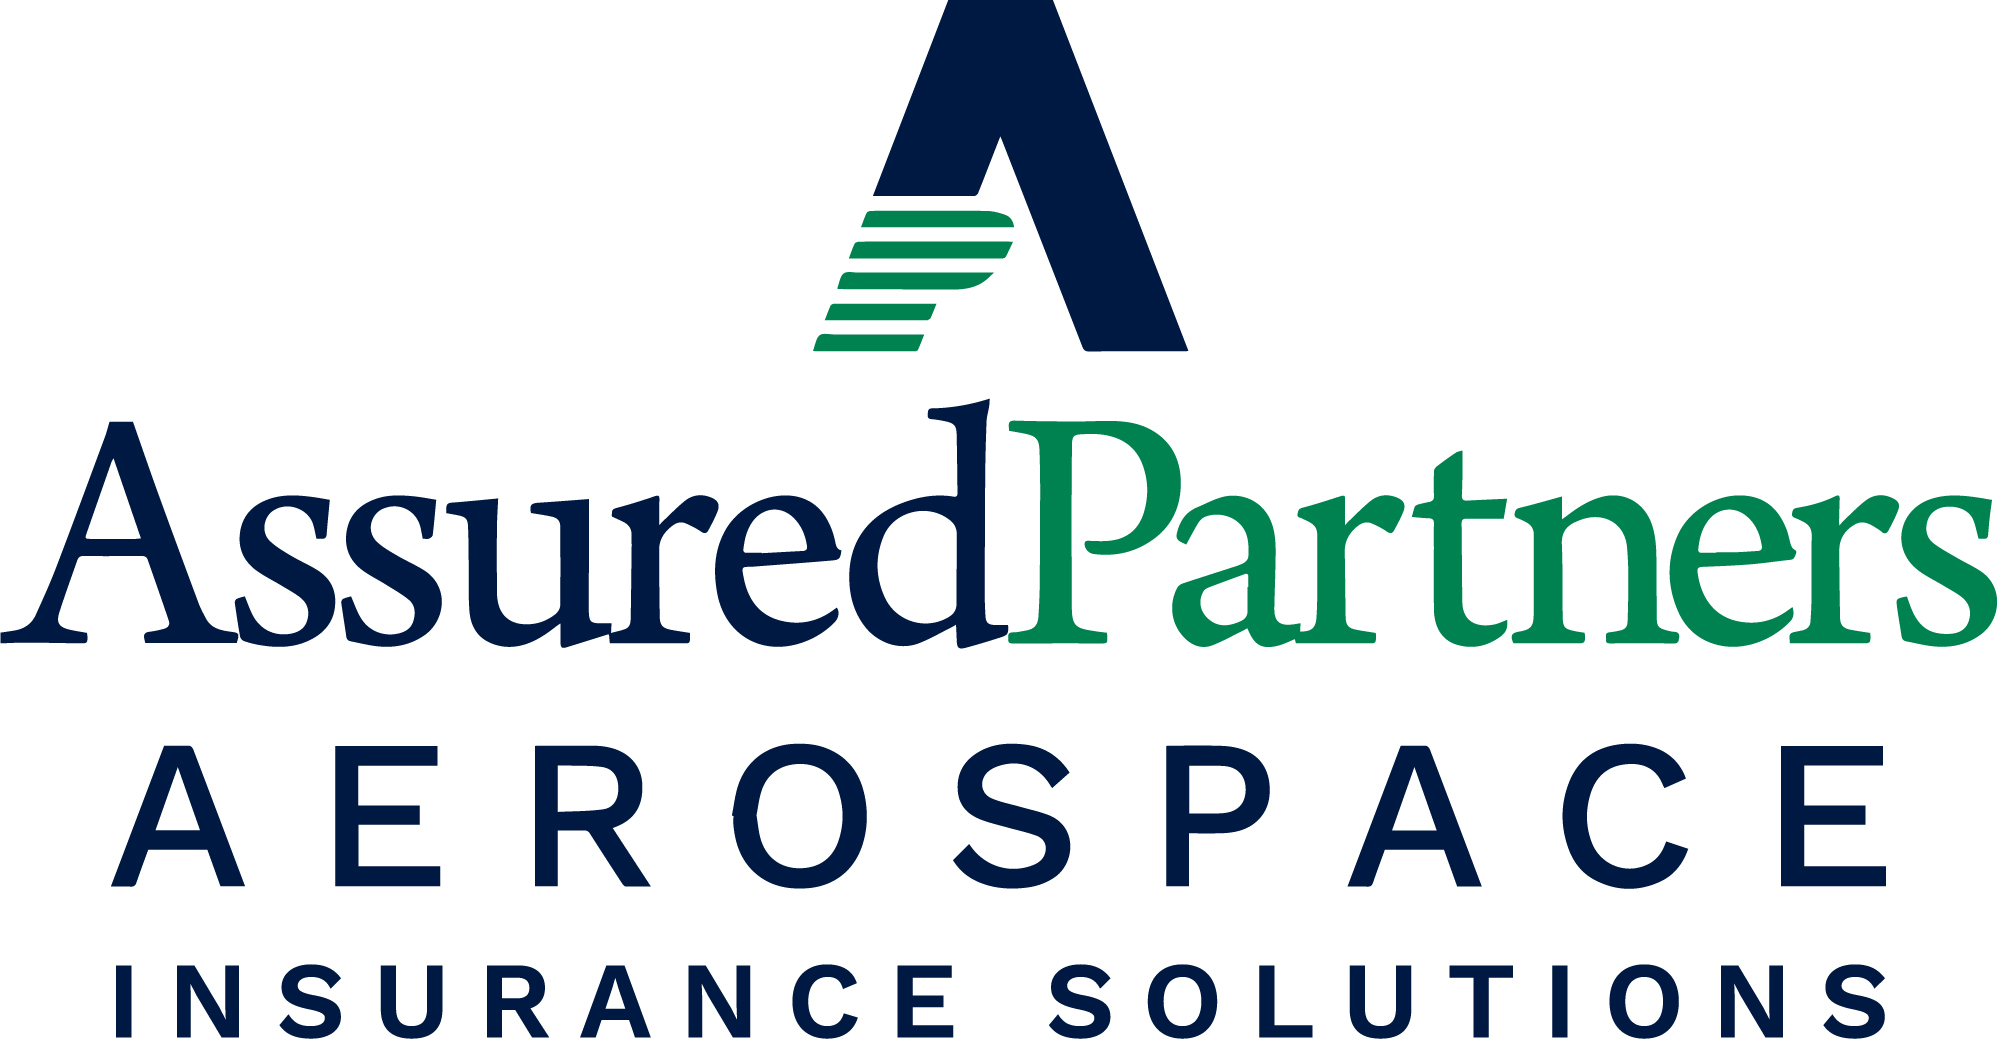 Assured Partners | AOPA Insurance Partner